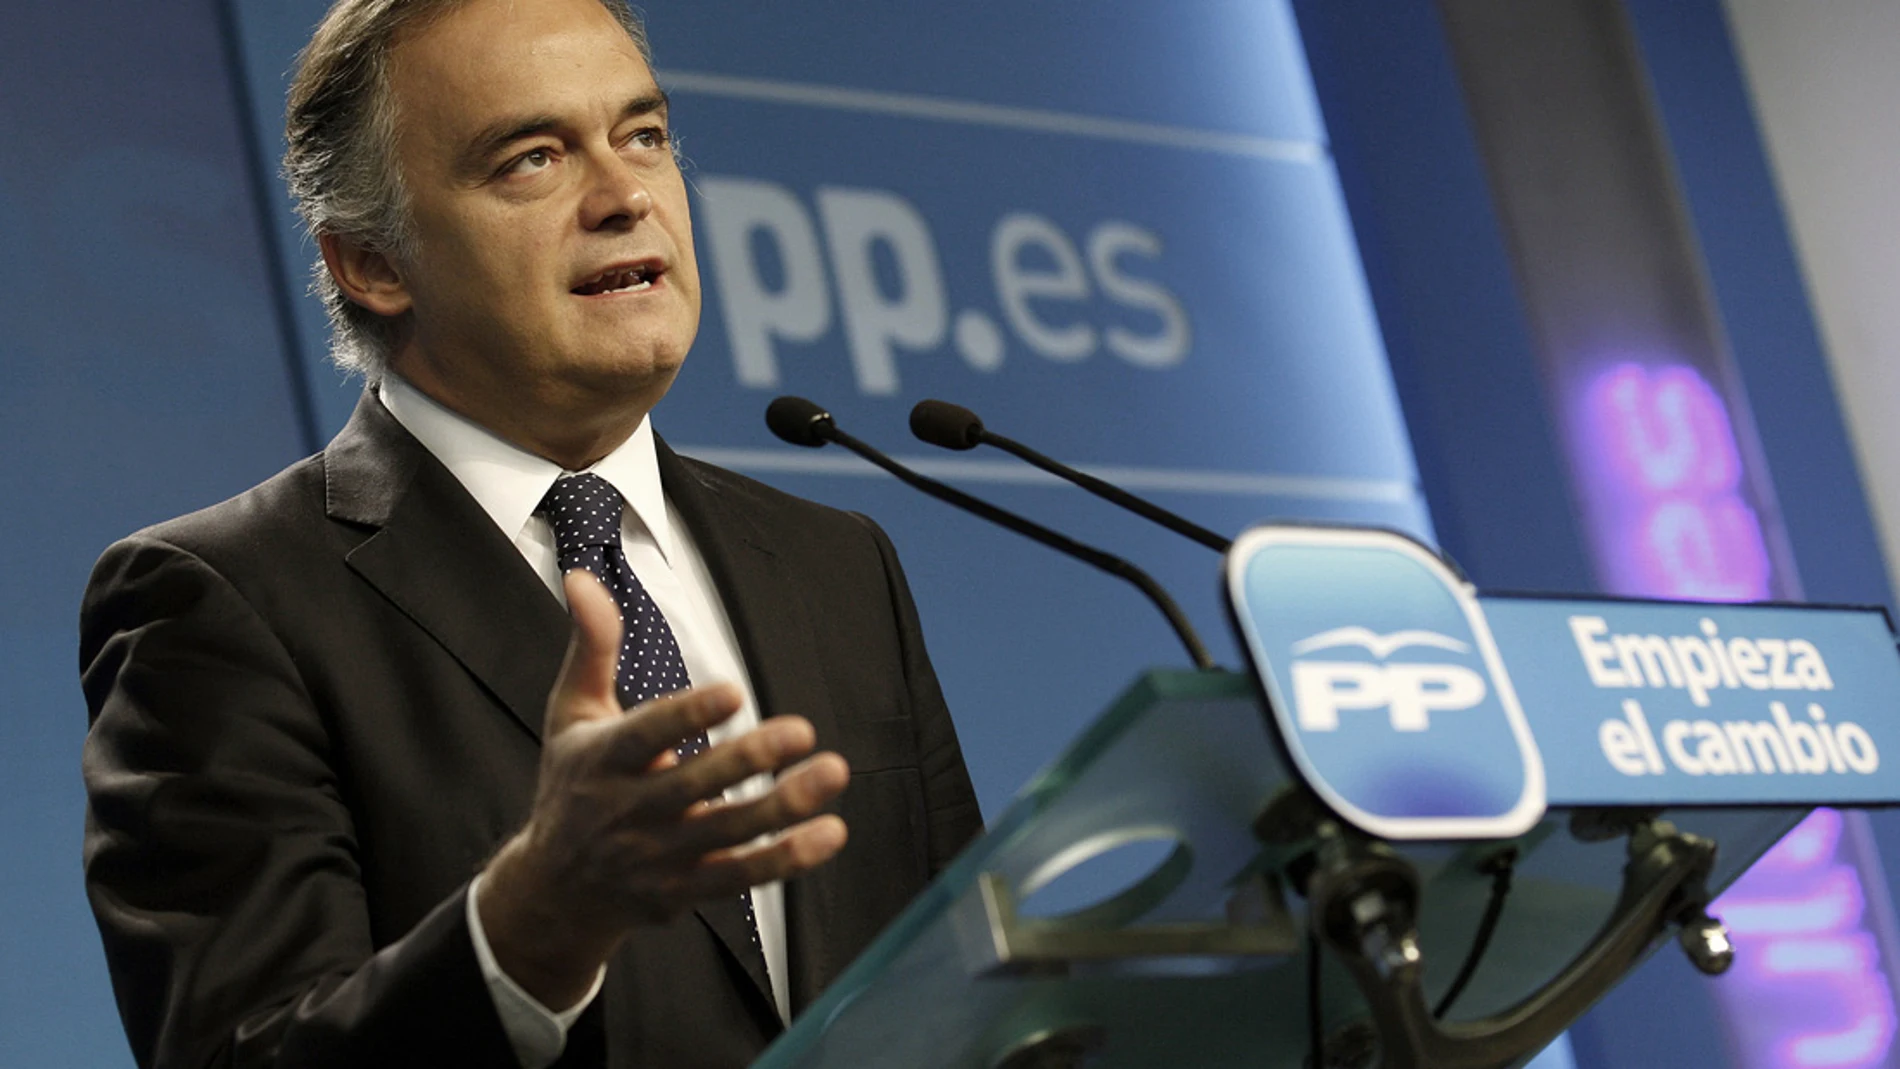 Esteban González Pons, vicesecretario de Comunicación del PP